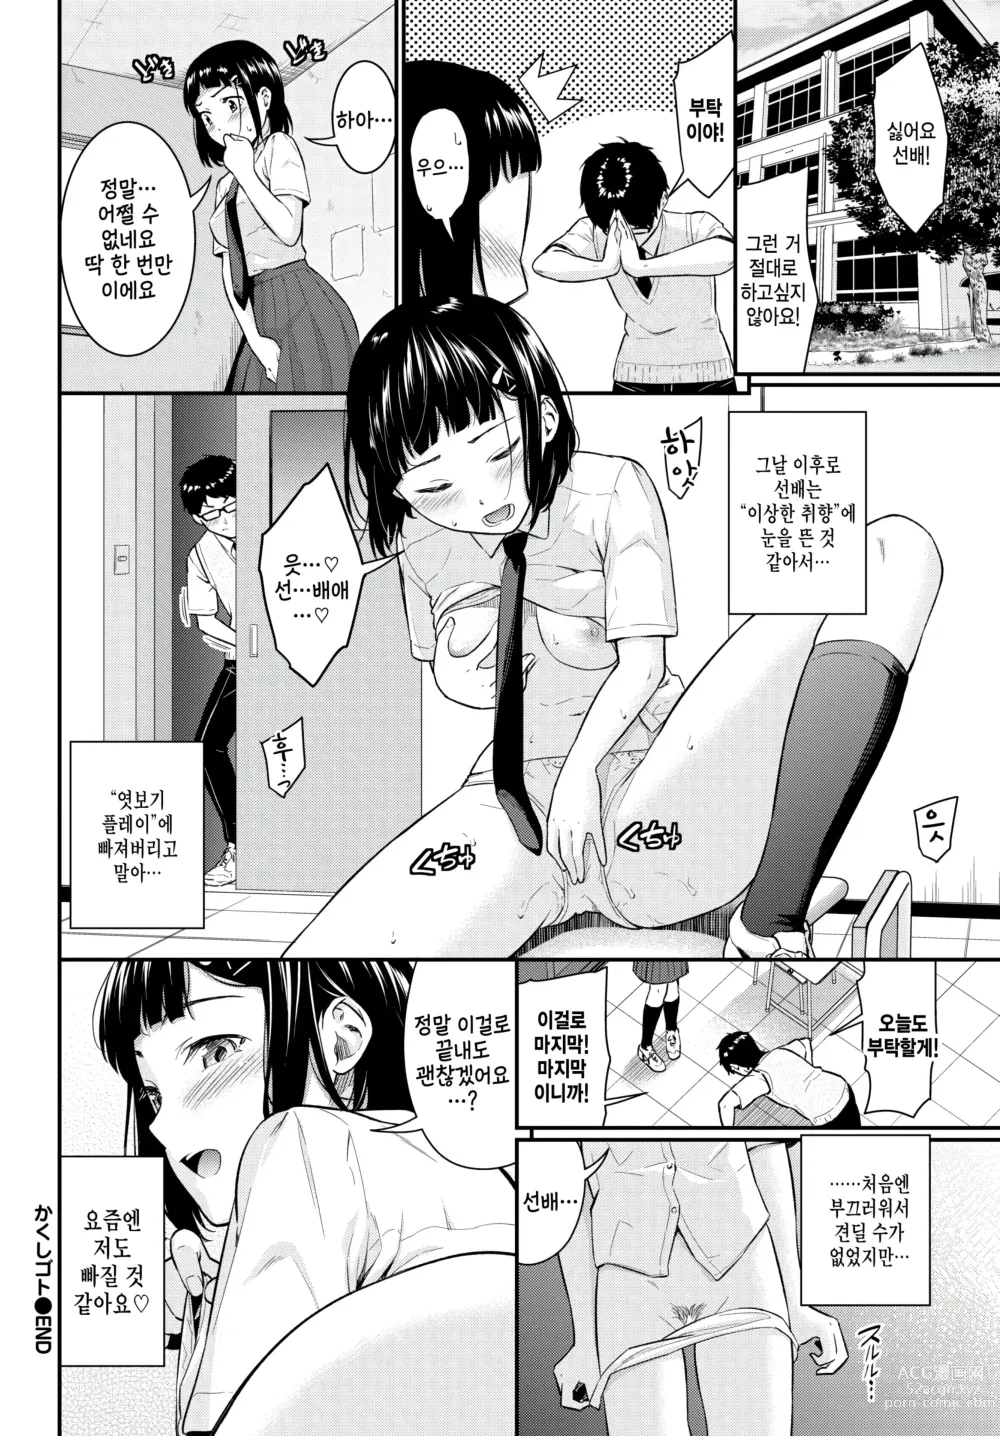 Page 20 of manga Kakushigoto